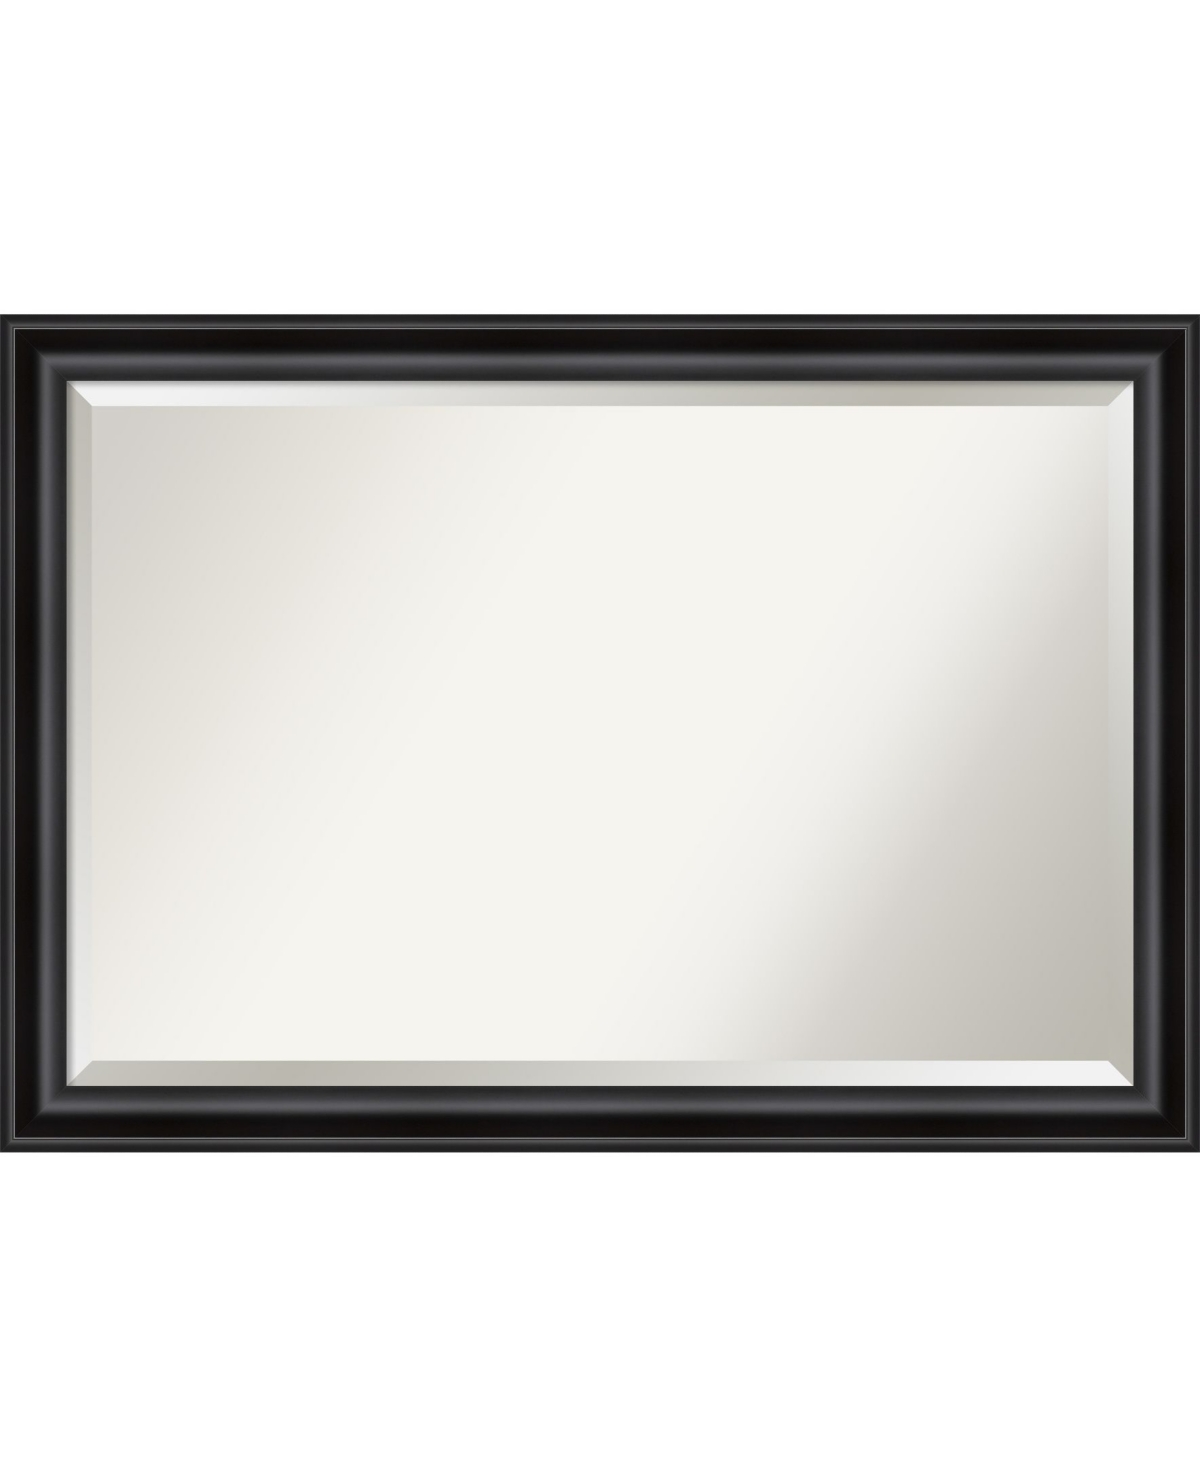 Grand Framed Bathroom Vanity Wall Mirror, 39.88" x 27.88" - Black